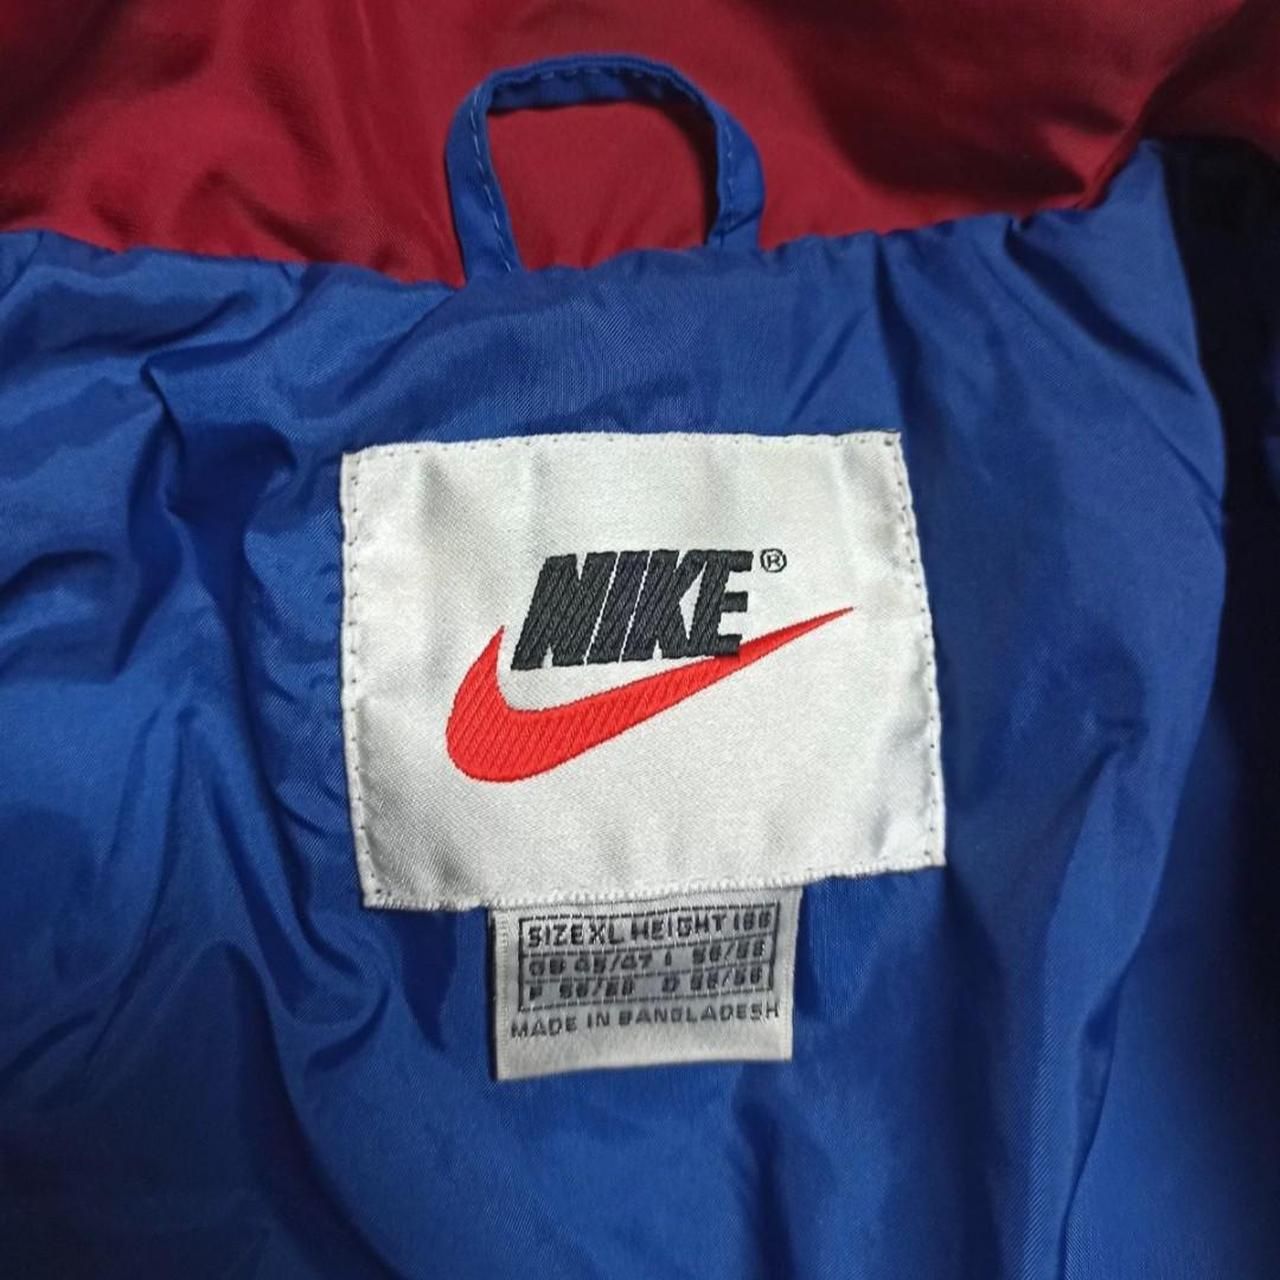 Nike vintage spellout jacket 90s kurtka lekka bomberka wiosenna